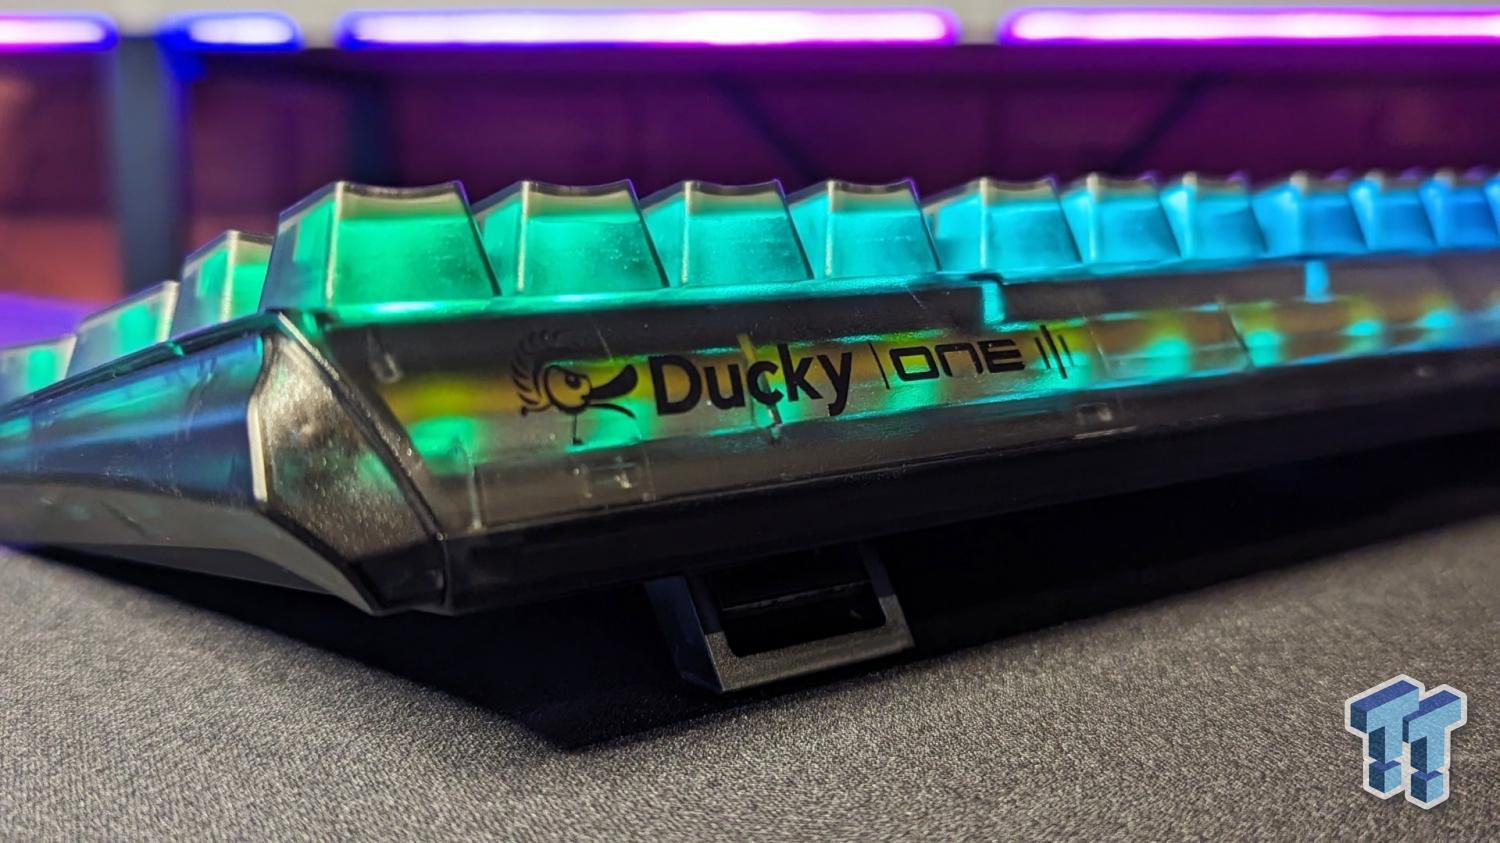 Ducky One III Aura: Update in transparent design